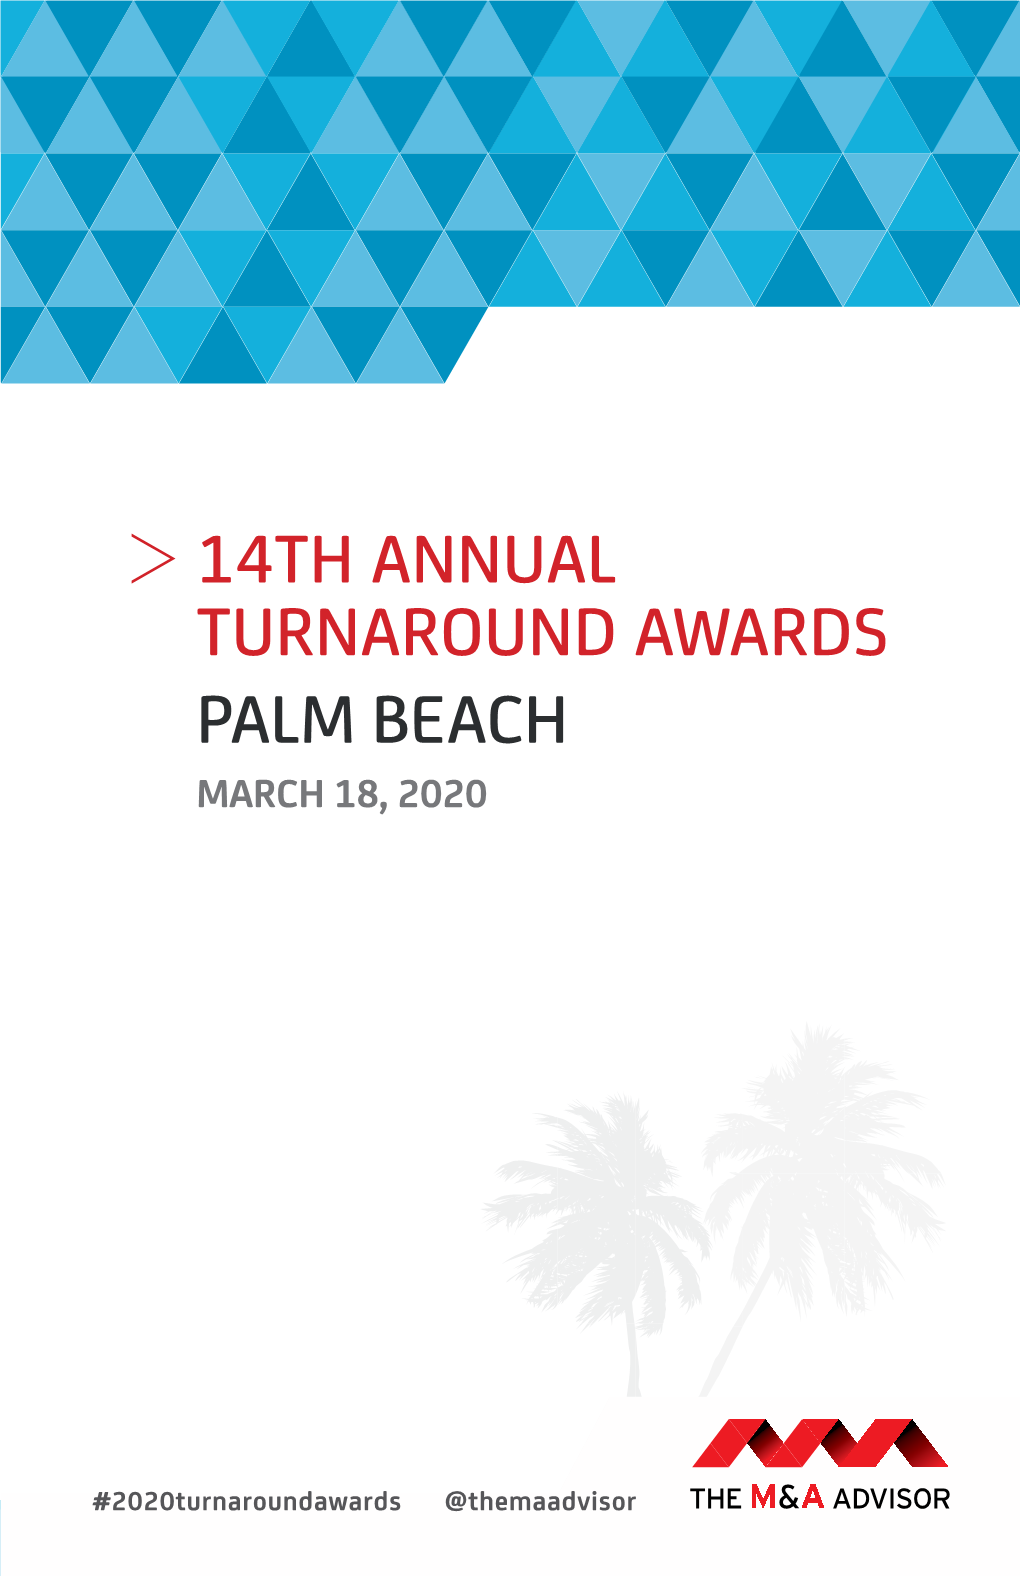 The 14Th Annual Turnaround Awards